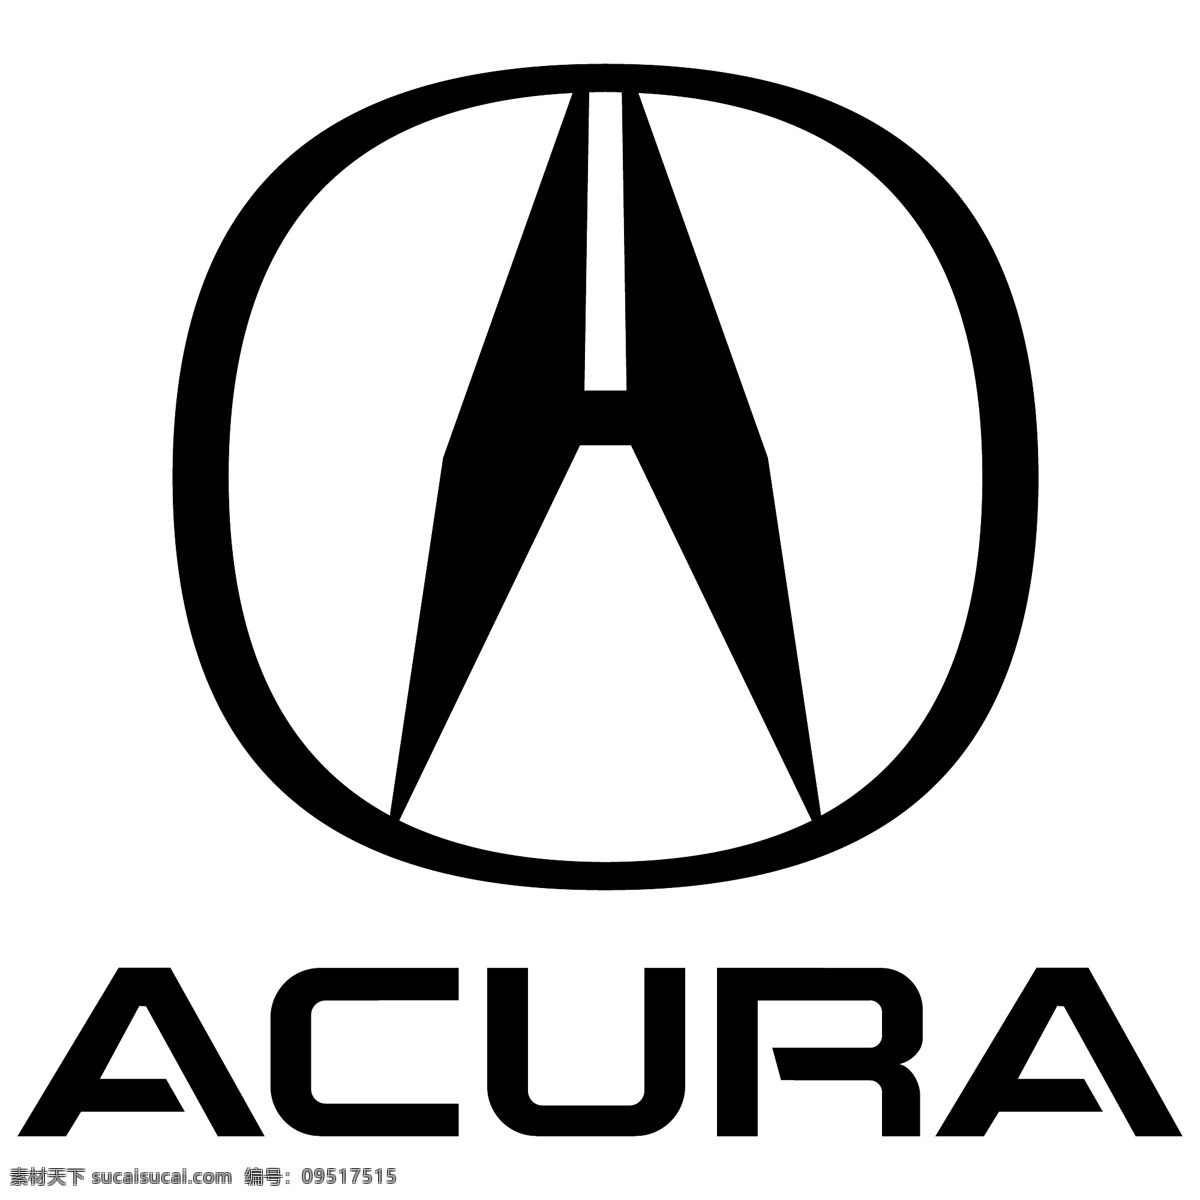 acura 讴歌 系列 logo 大全 标识标志图标 企业 标志 世界 汽车行业 矢量图库